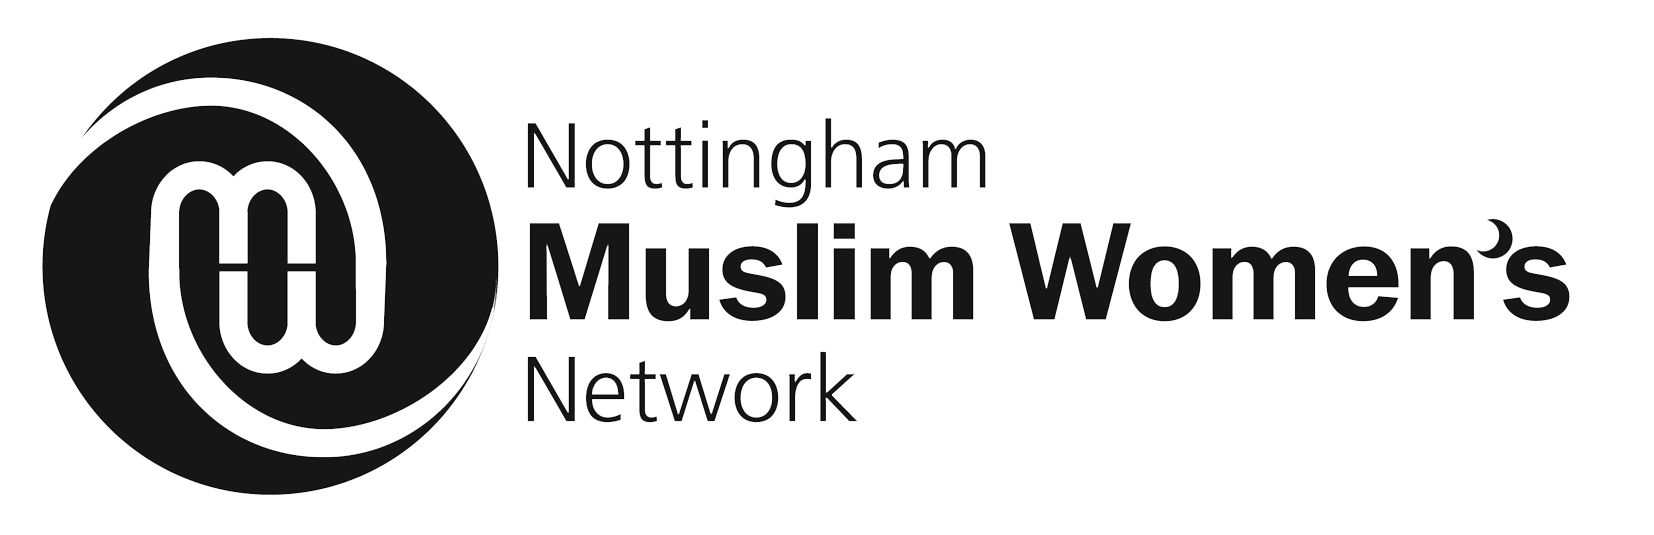 Nottingham Muslim Women's Network